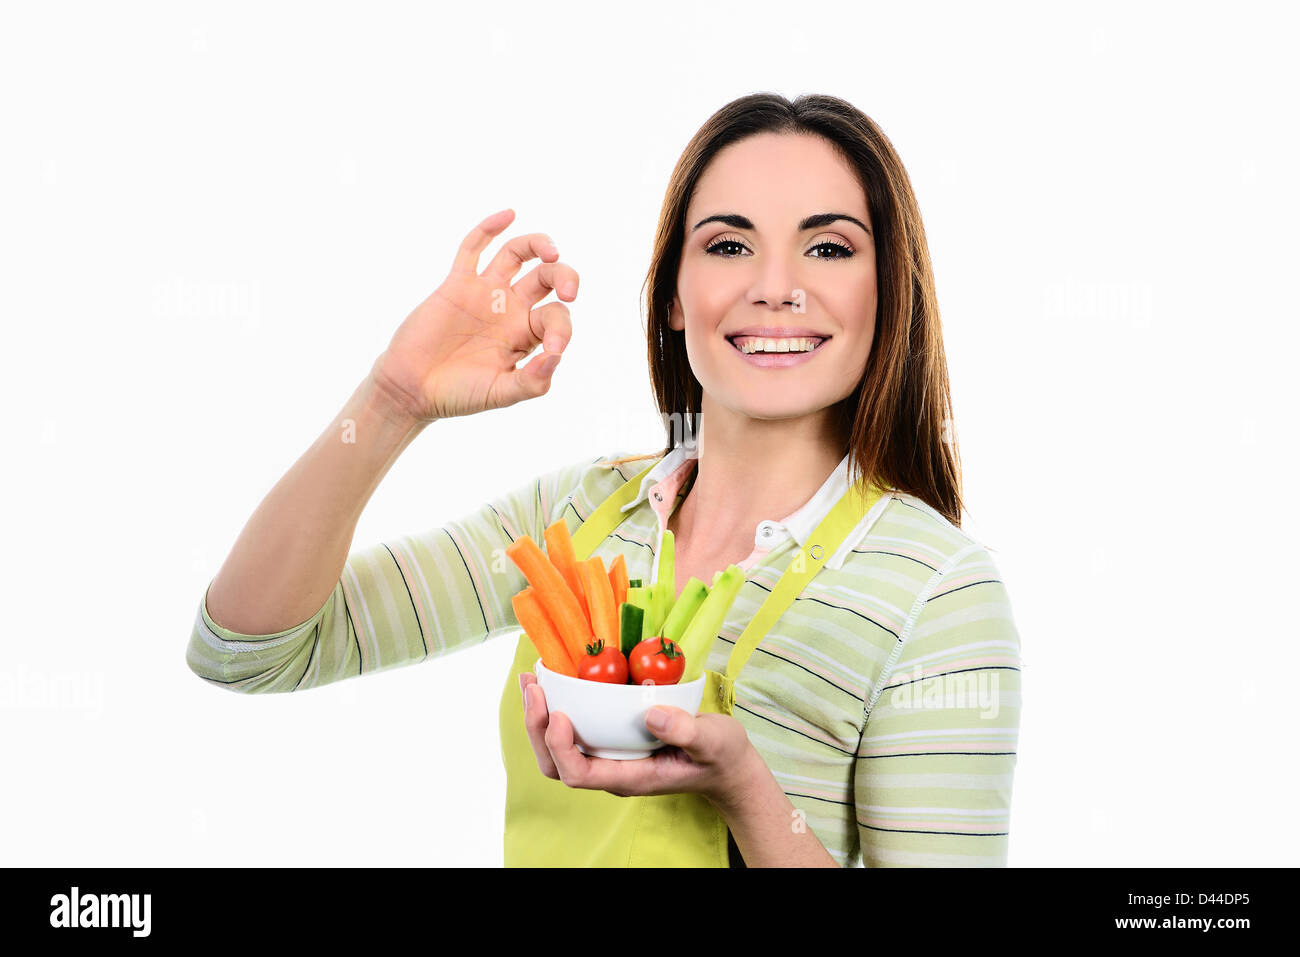 Junge Frau kochen. Gesunde Ernährung - Gemüsesalat. Ernährung. Diät-Konzept. Gesunde Lebensweise. Kochen zu Hause. Essen zubereiten Stockfoto